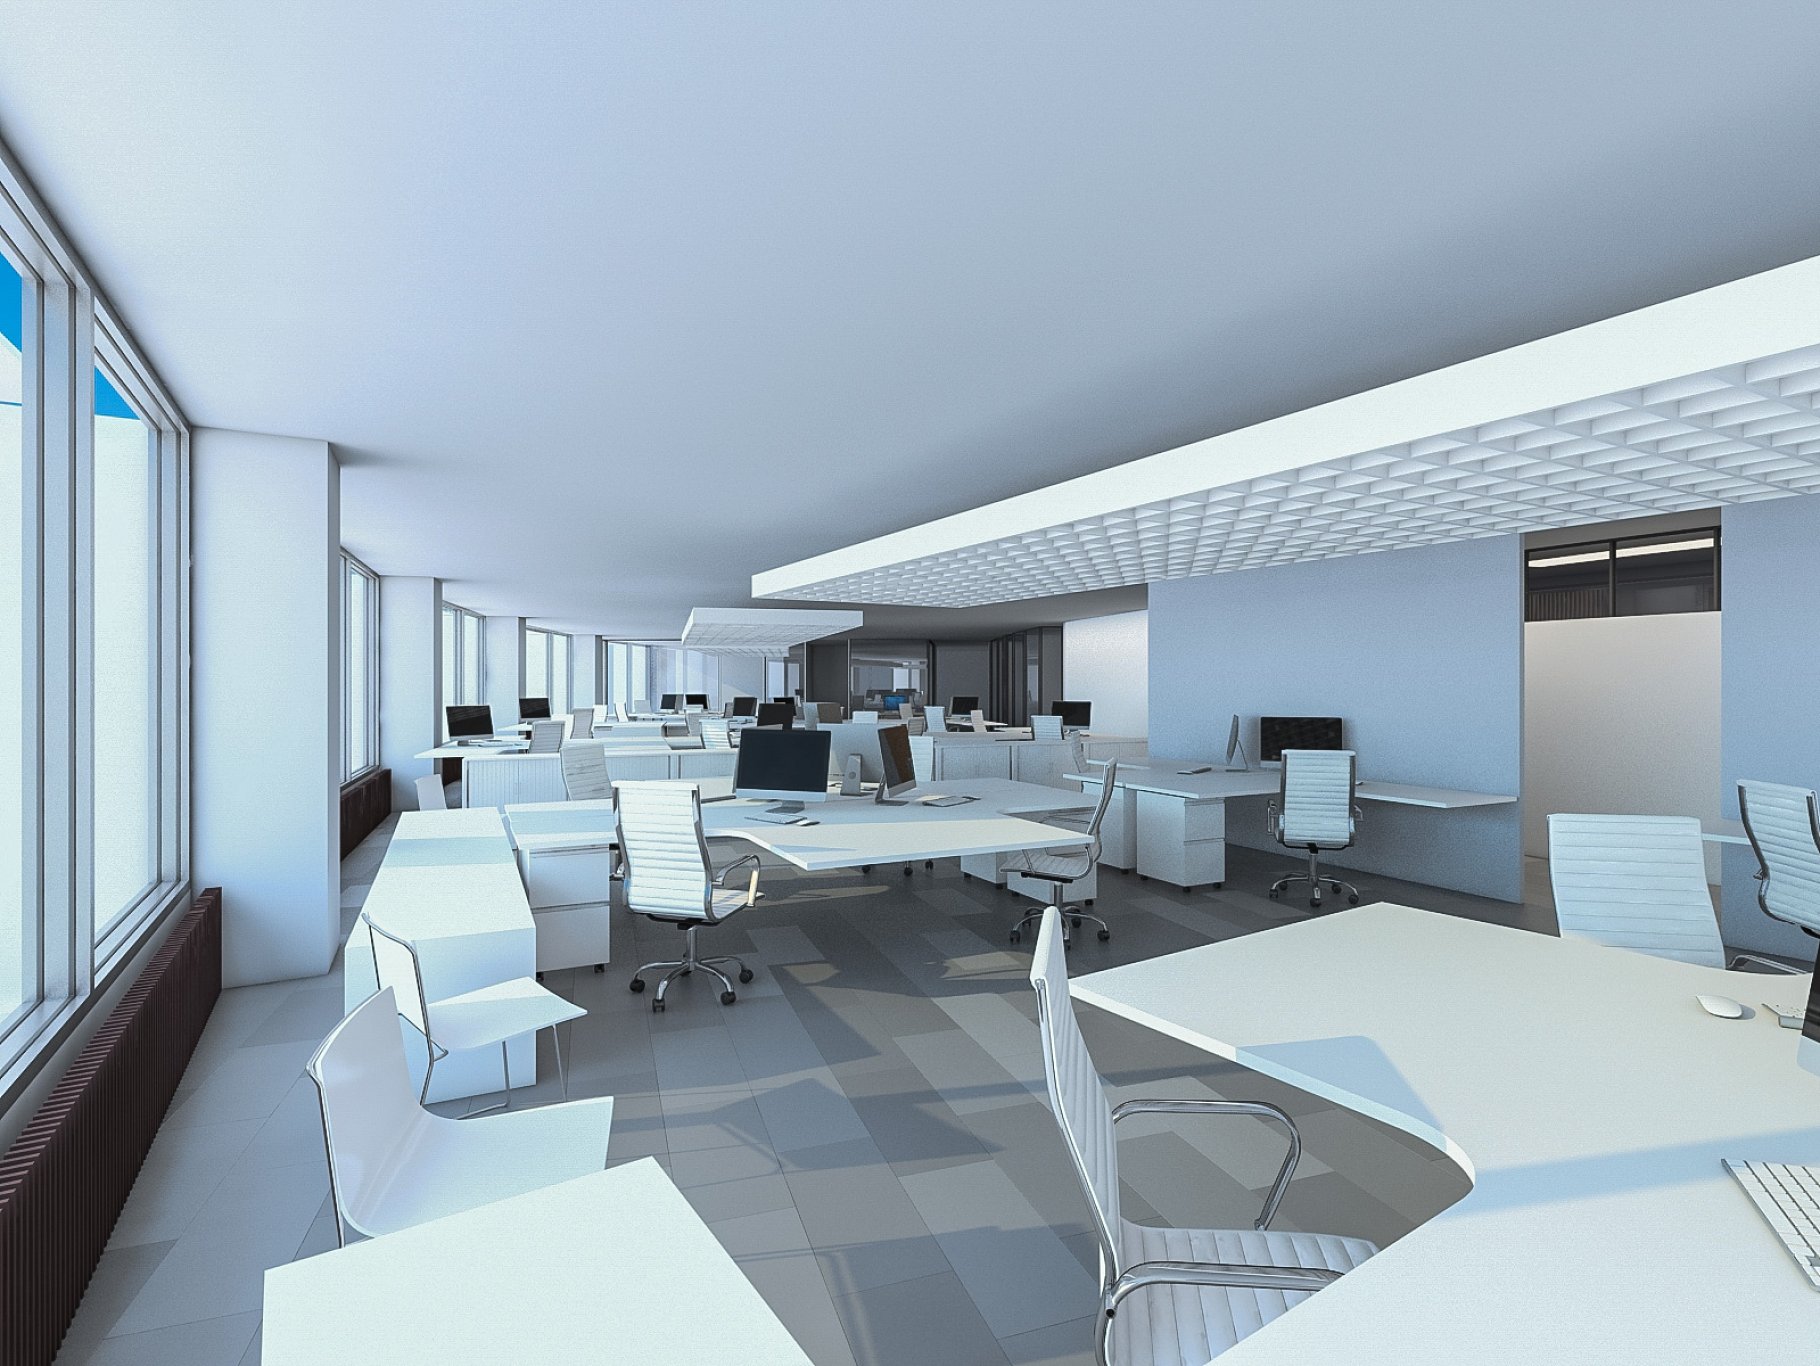 Rendering of an elegant 3d model of an office interior